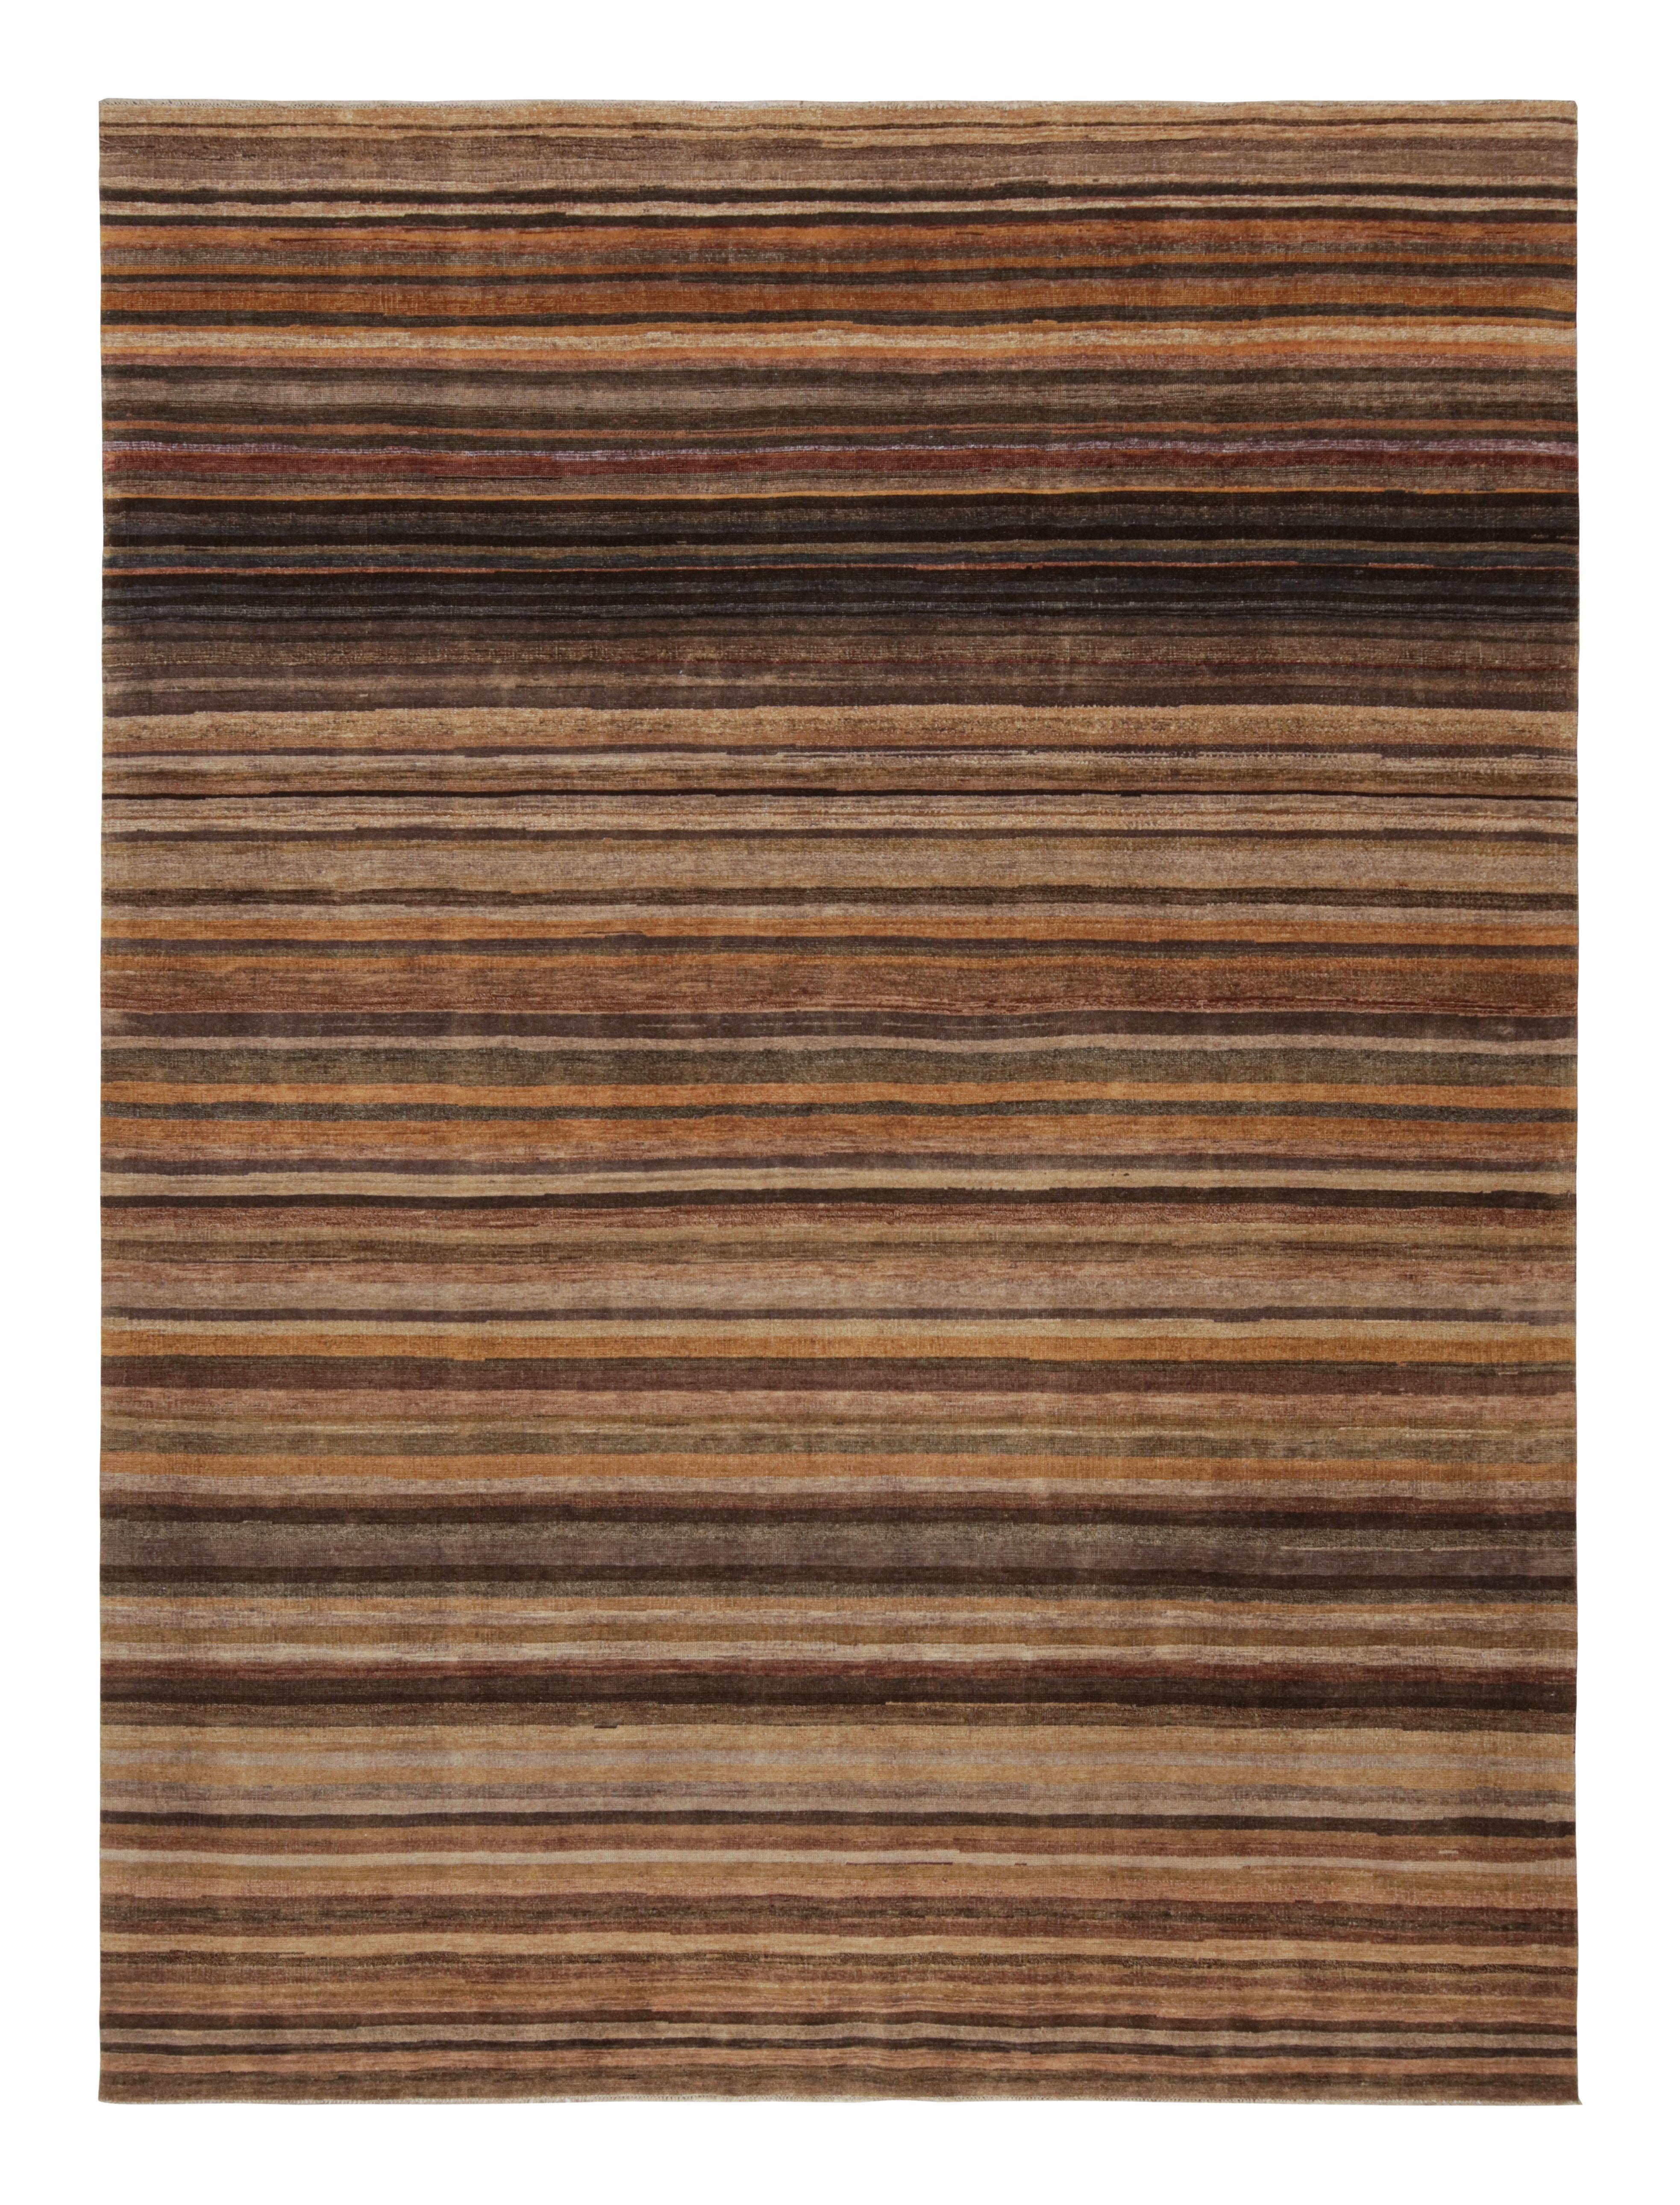 Rug & Kilim's Textural Rug in Beige-Brown Stripes and Striae (tapis texturé à rayures beige et marron) Neuf - En vente à Long Island City, NY